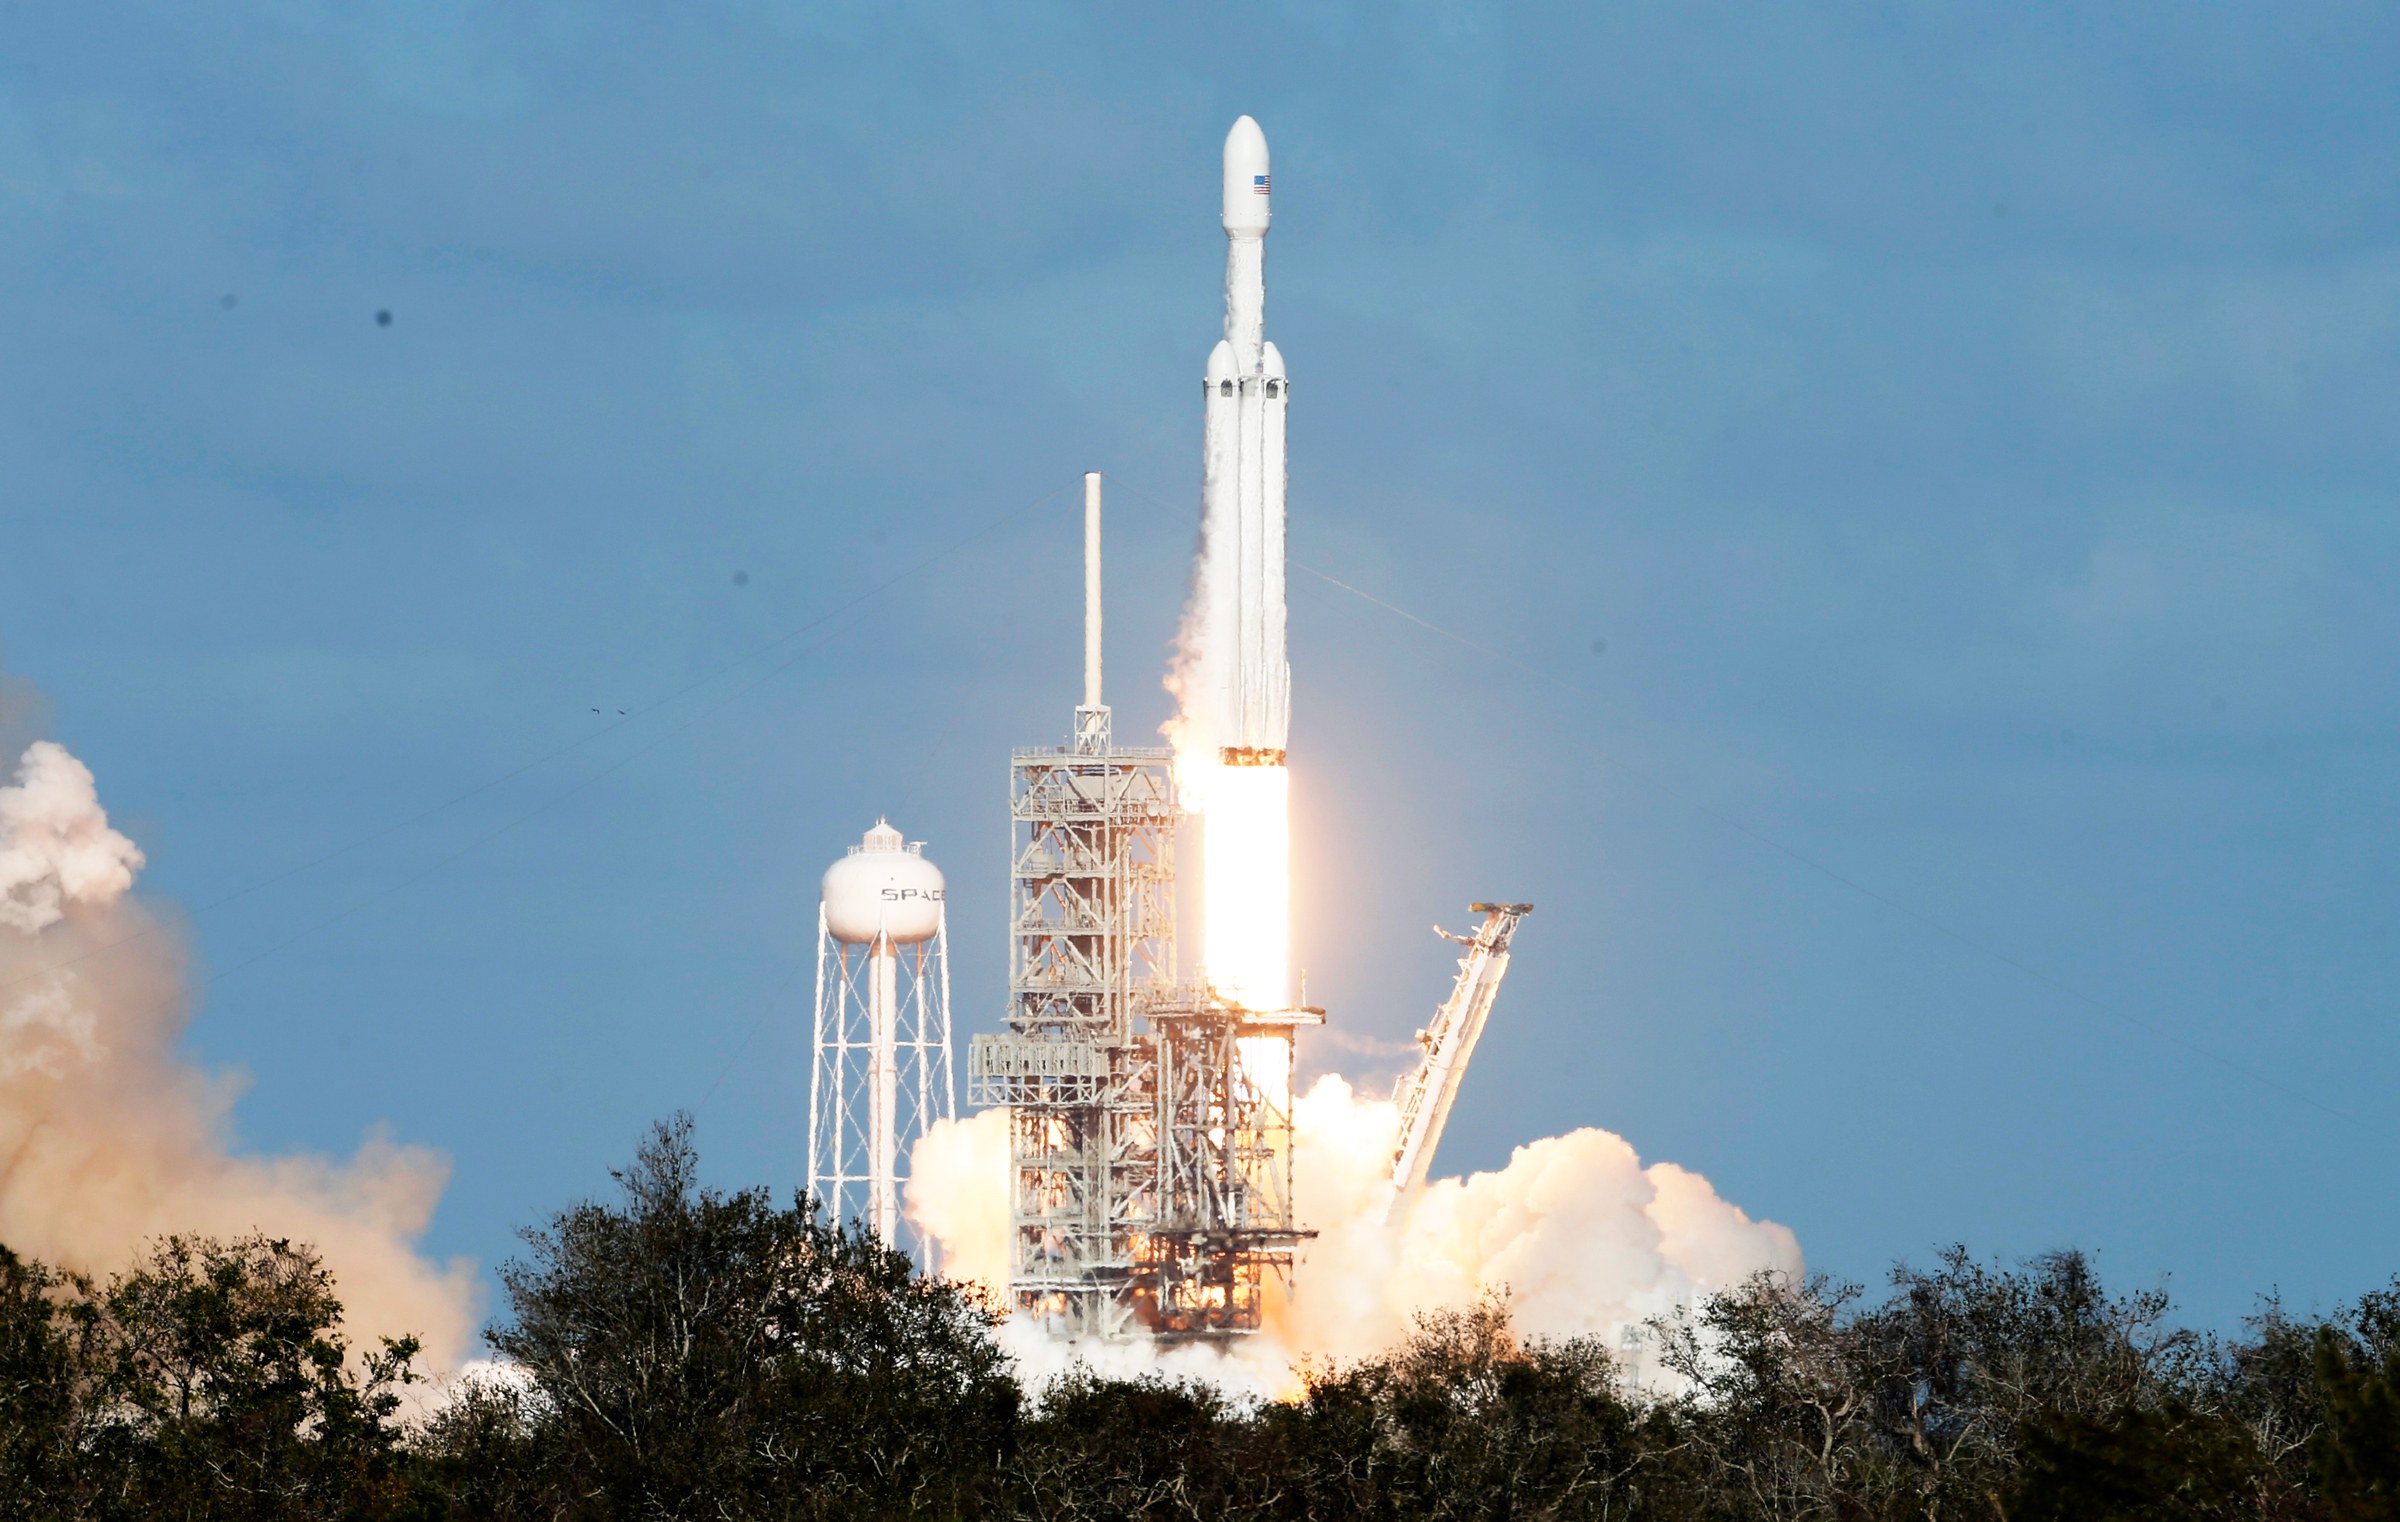 Elon Musk’s Falcon Heavy rocket launches successfully